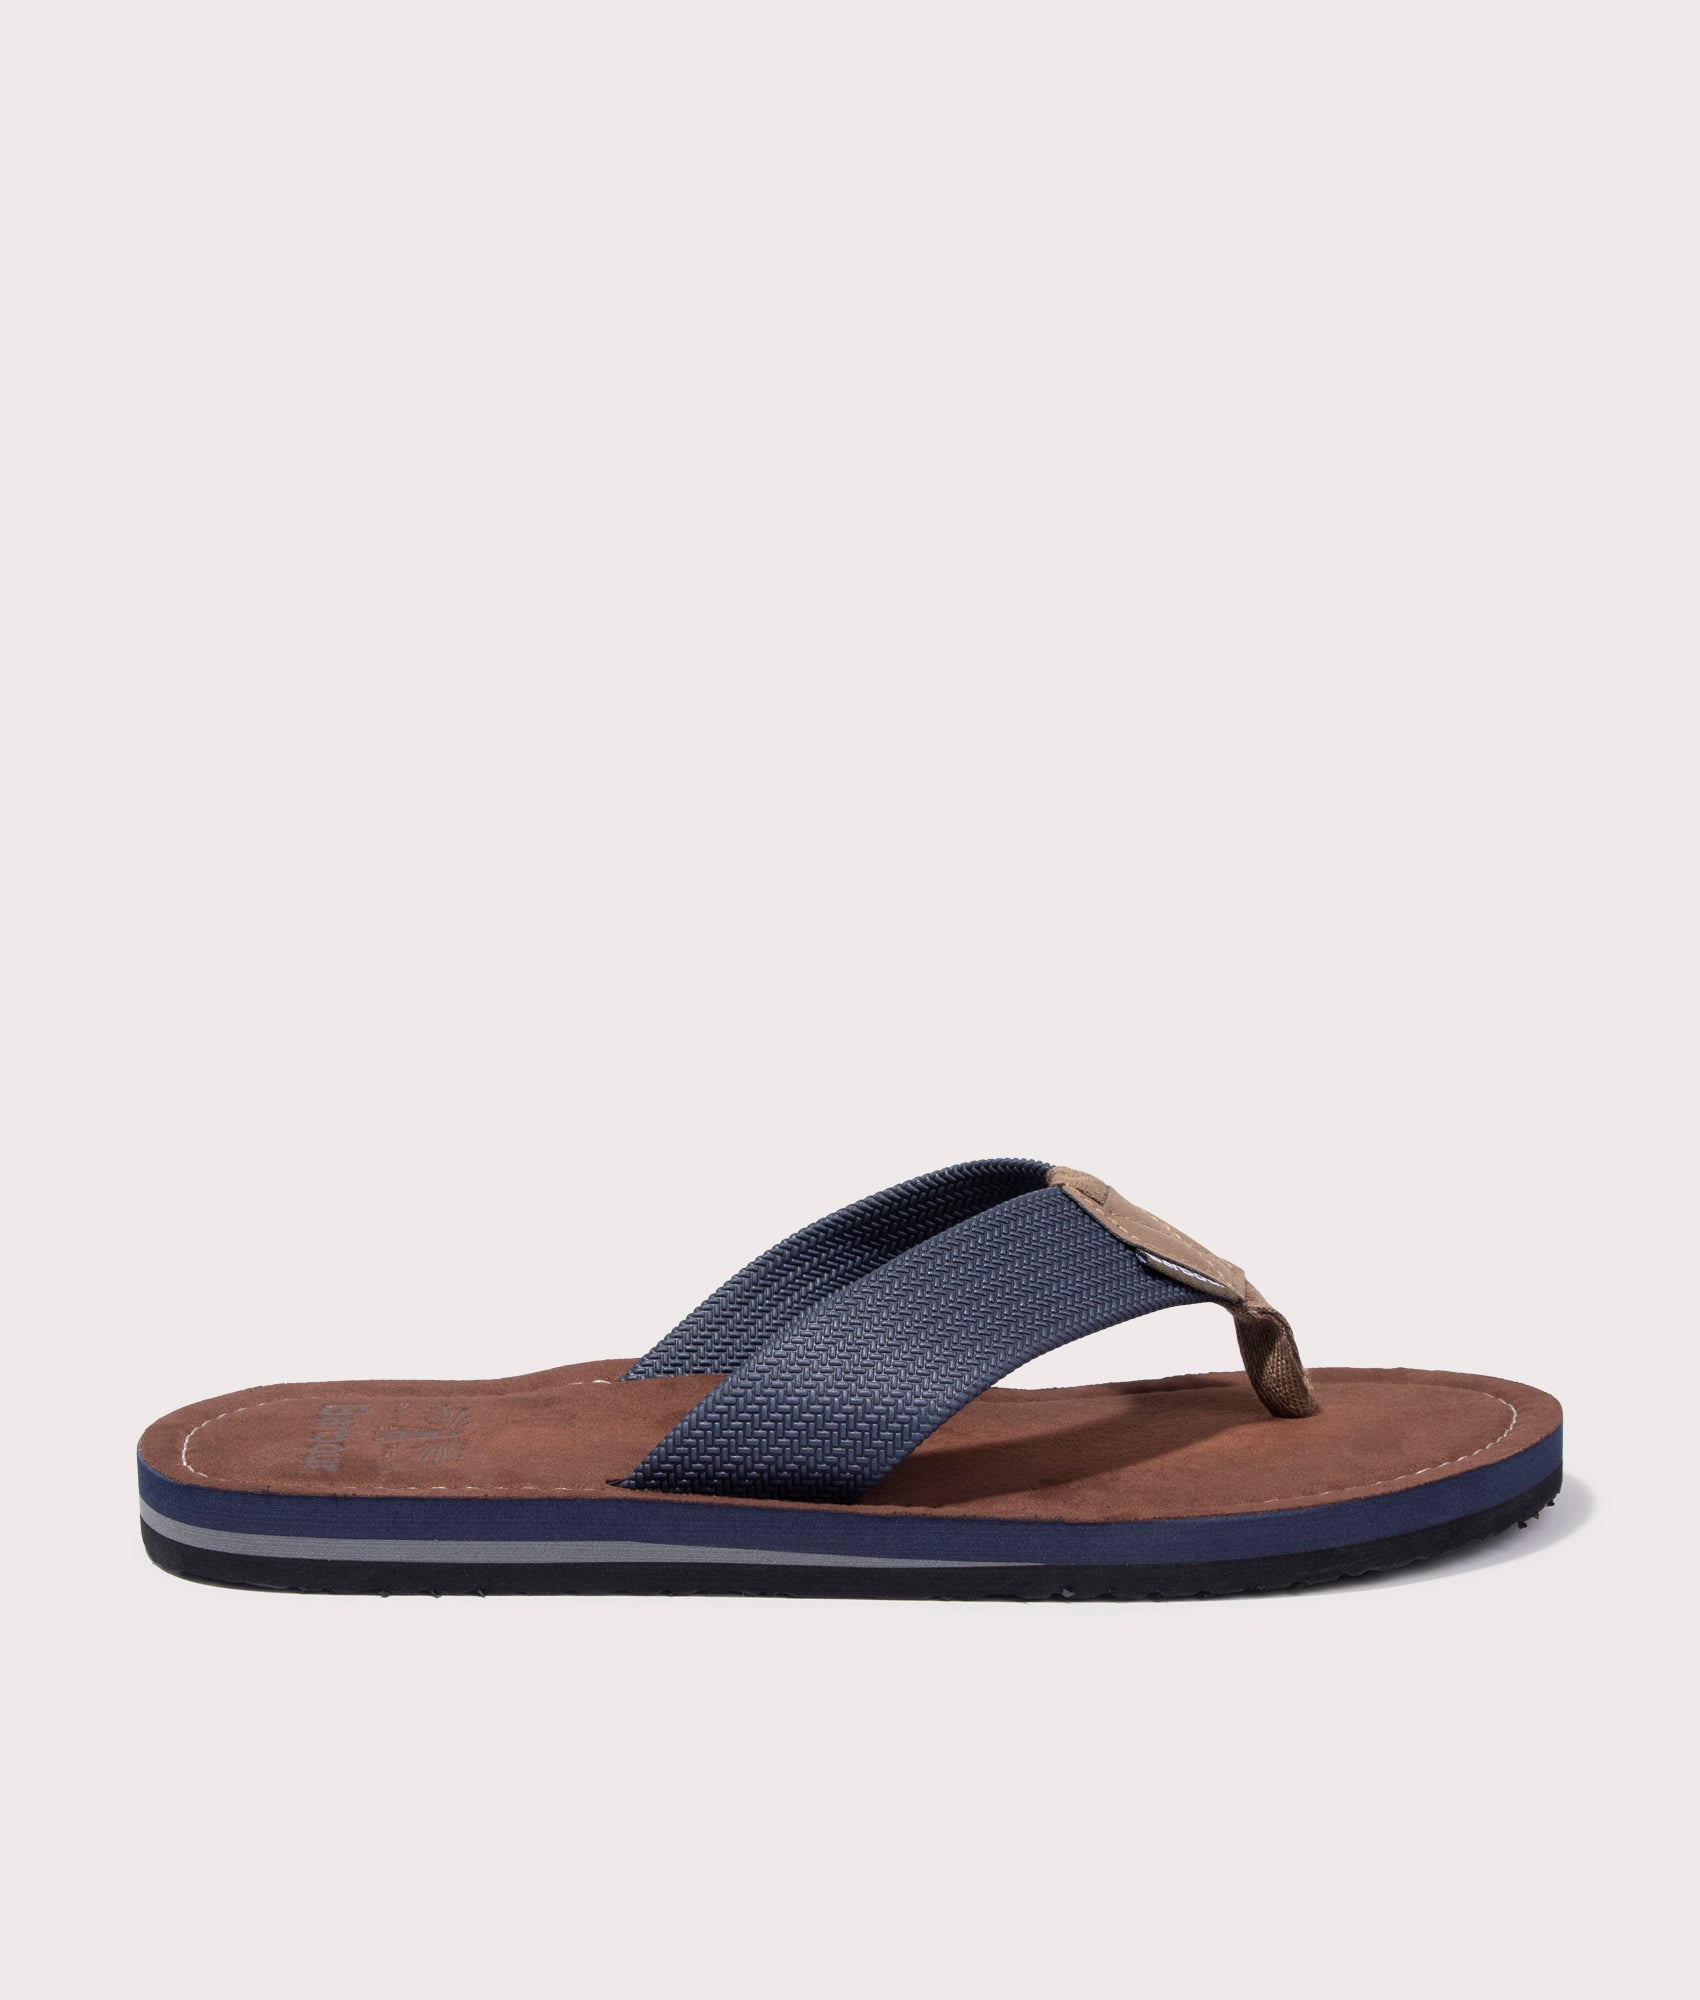 Barbour Lifestyle Mens Toeman Beach Sandals - Colour: NY98 Navy - Size: 8